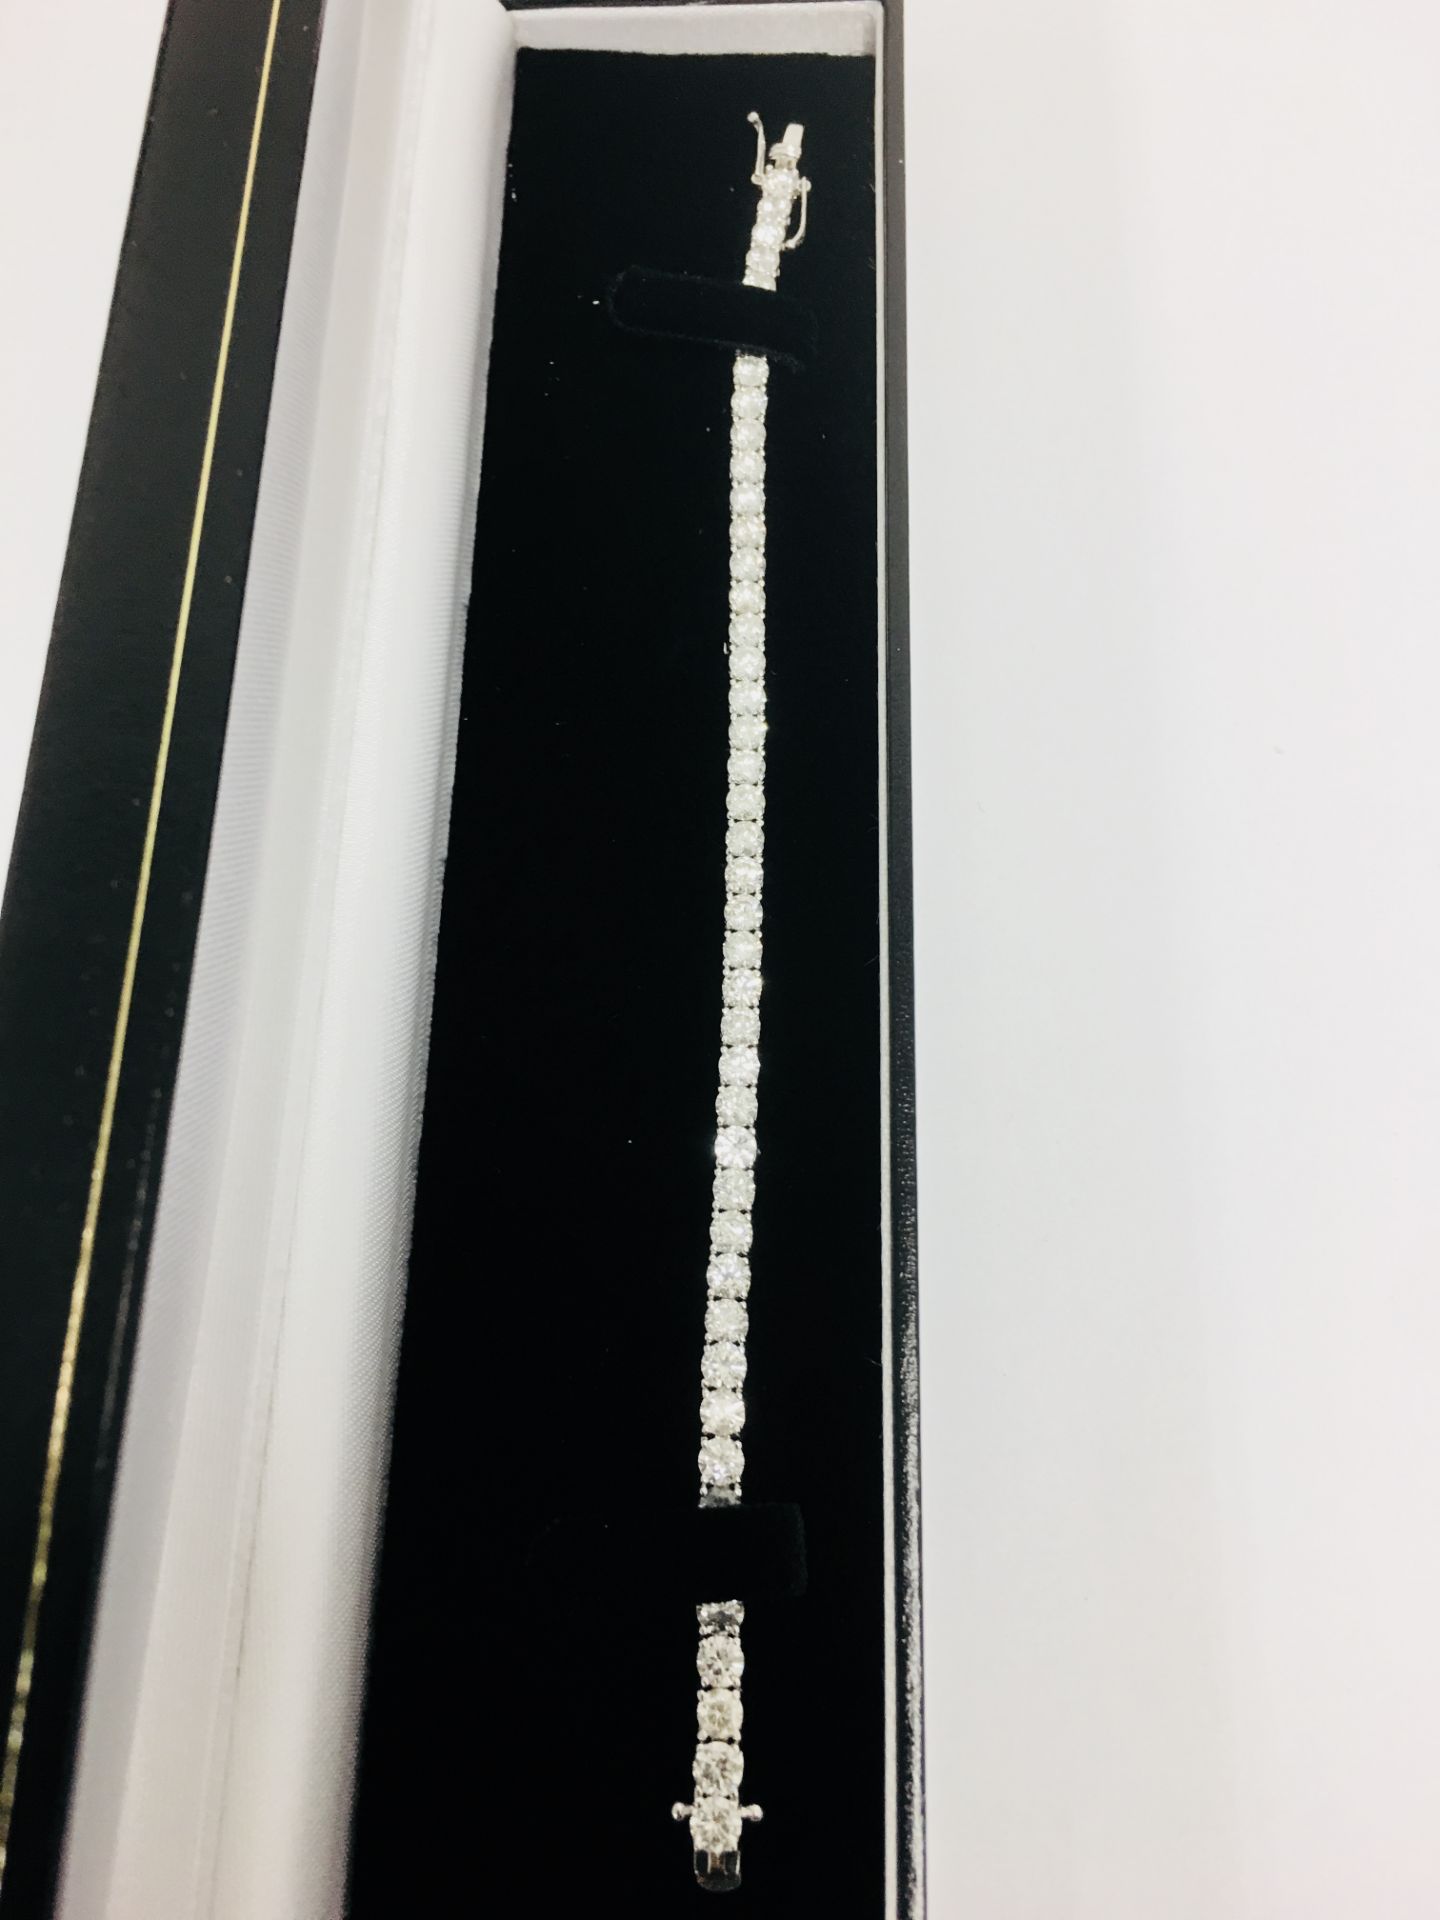 10.00Ct Diamond Tennis Bracelet Set With Brilliant Cut Diamonds Of H Colour, Si2-3 Clarity. - Image 23 of 26